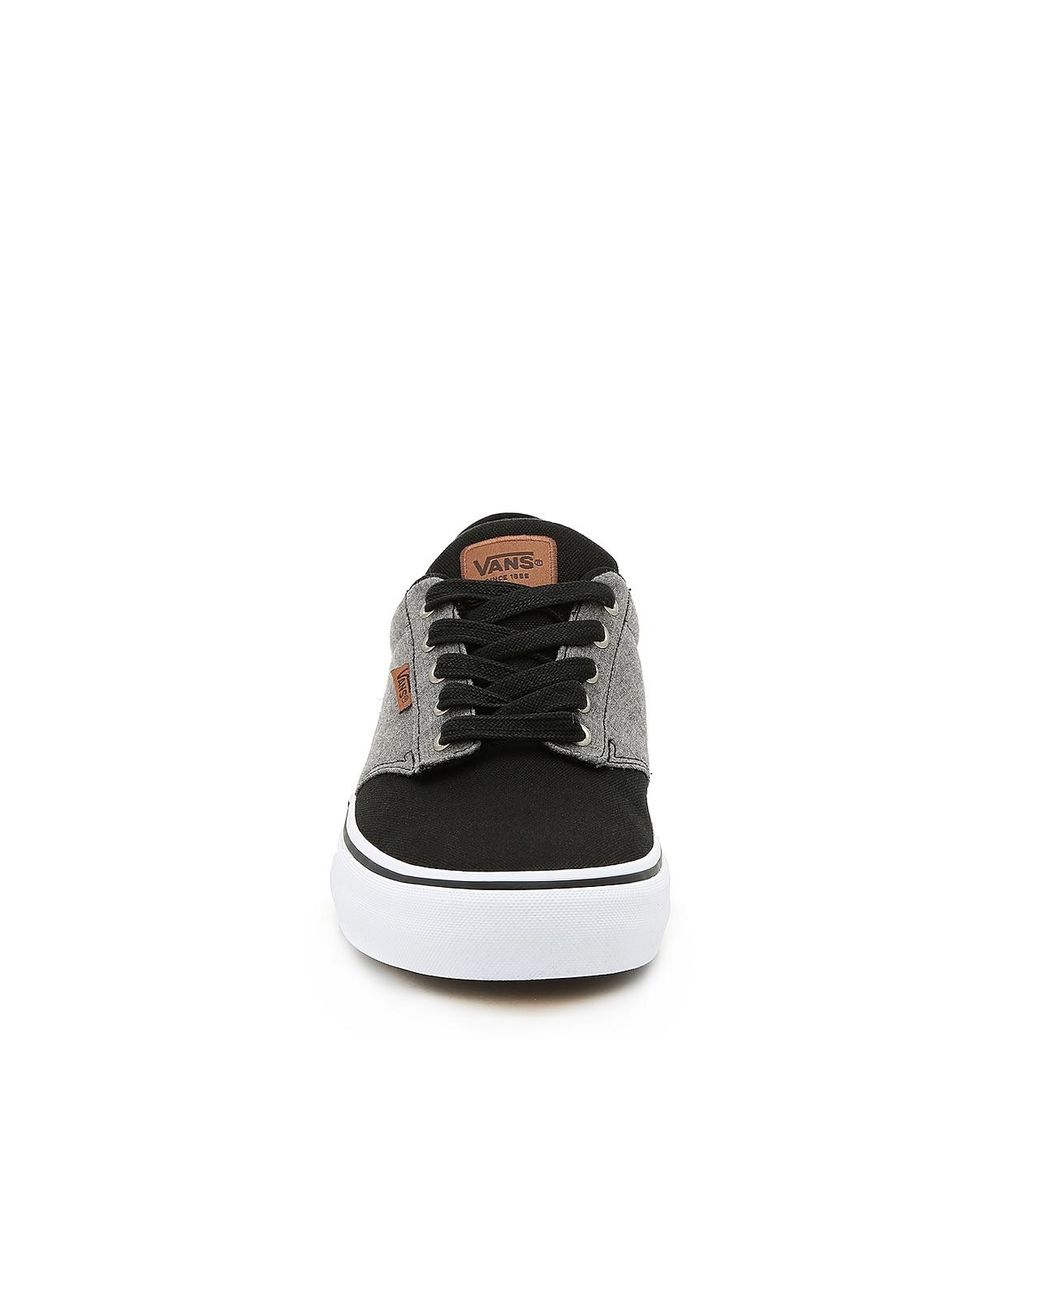 Vans Canvas Atwood Deluxe Sneaker in Black/Grey (Black) for Men - Lyst